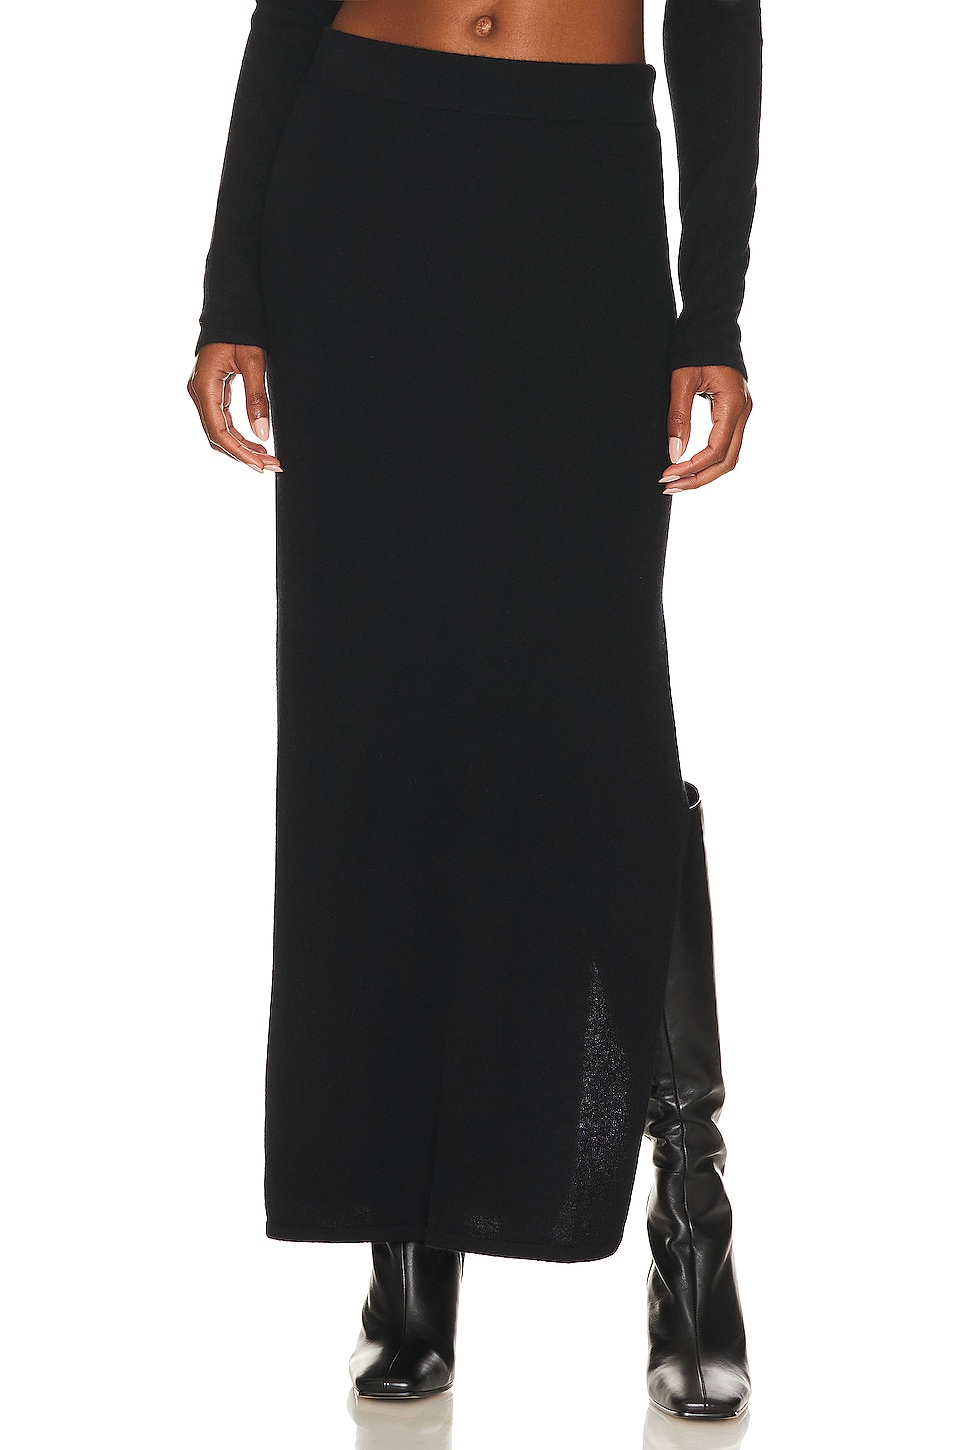 Свитер Splendid Johari Skirt, черный